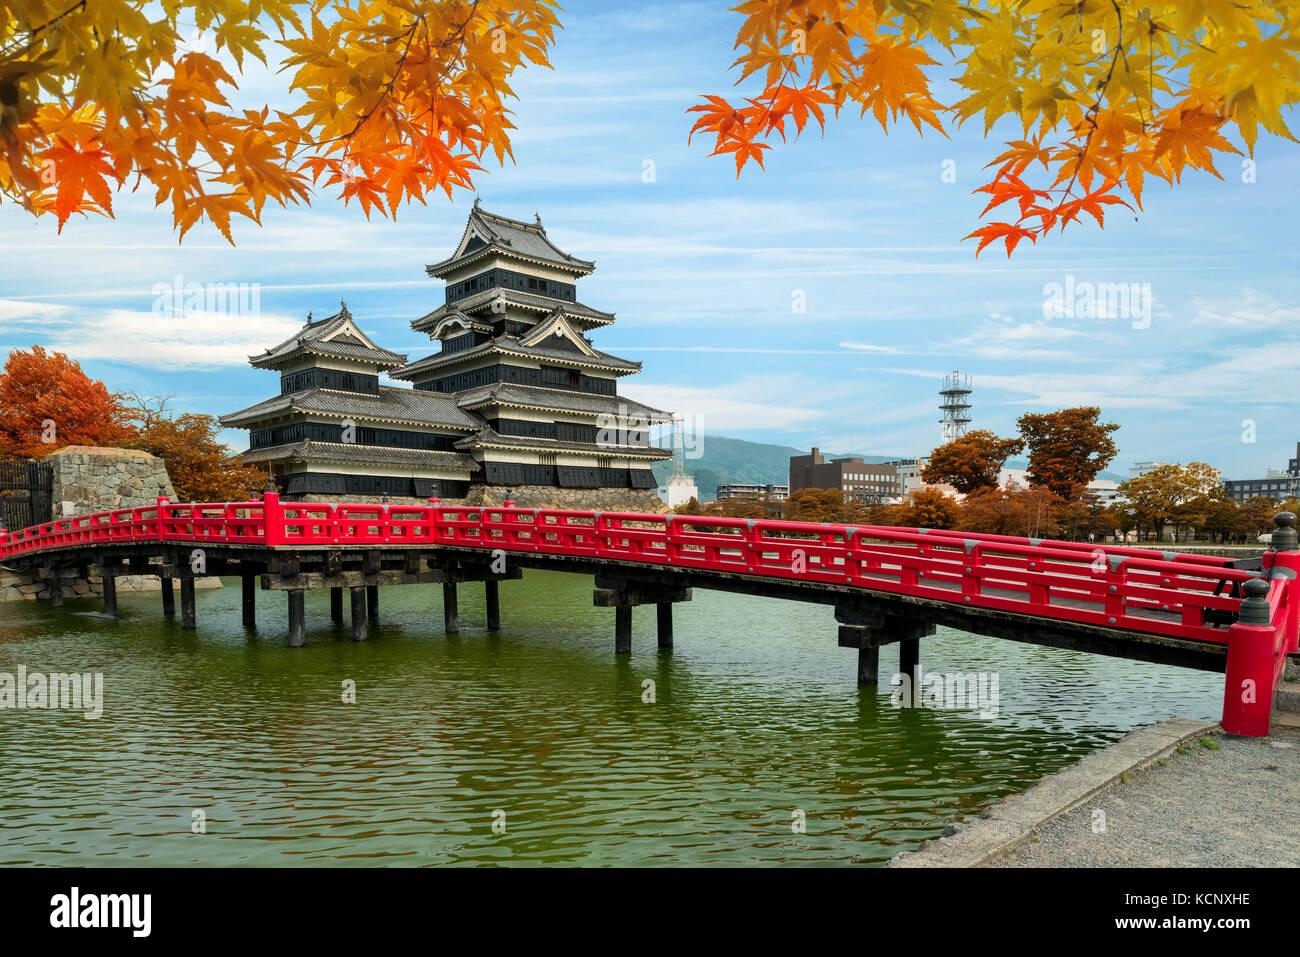 Schloß Matsumoto im Herbst Stadt Matsumoto, Nagano Prefecture, Japan. schönen Herbst in Japan. Stockfoto